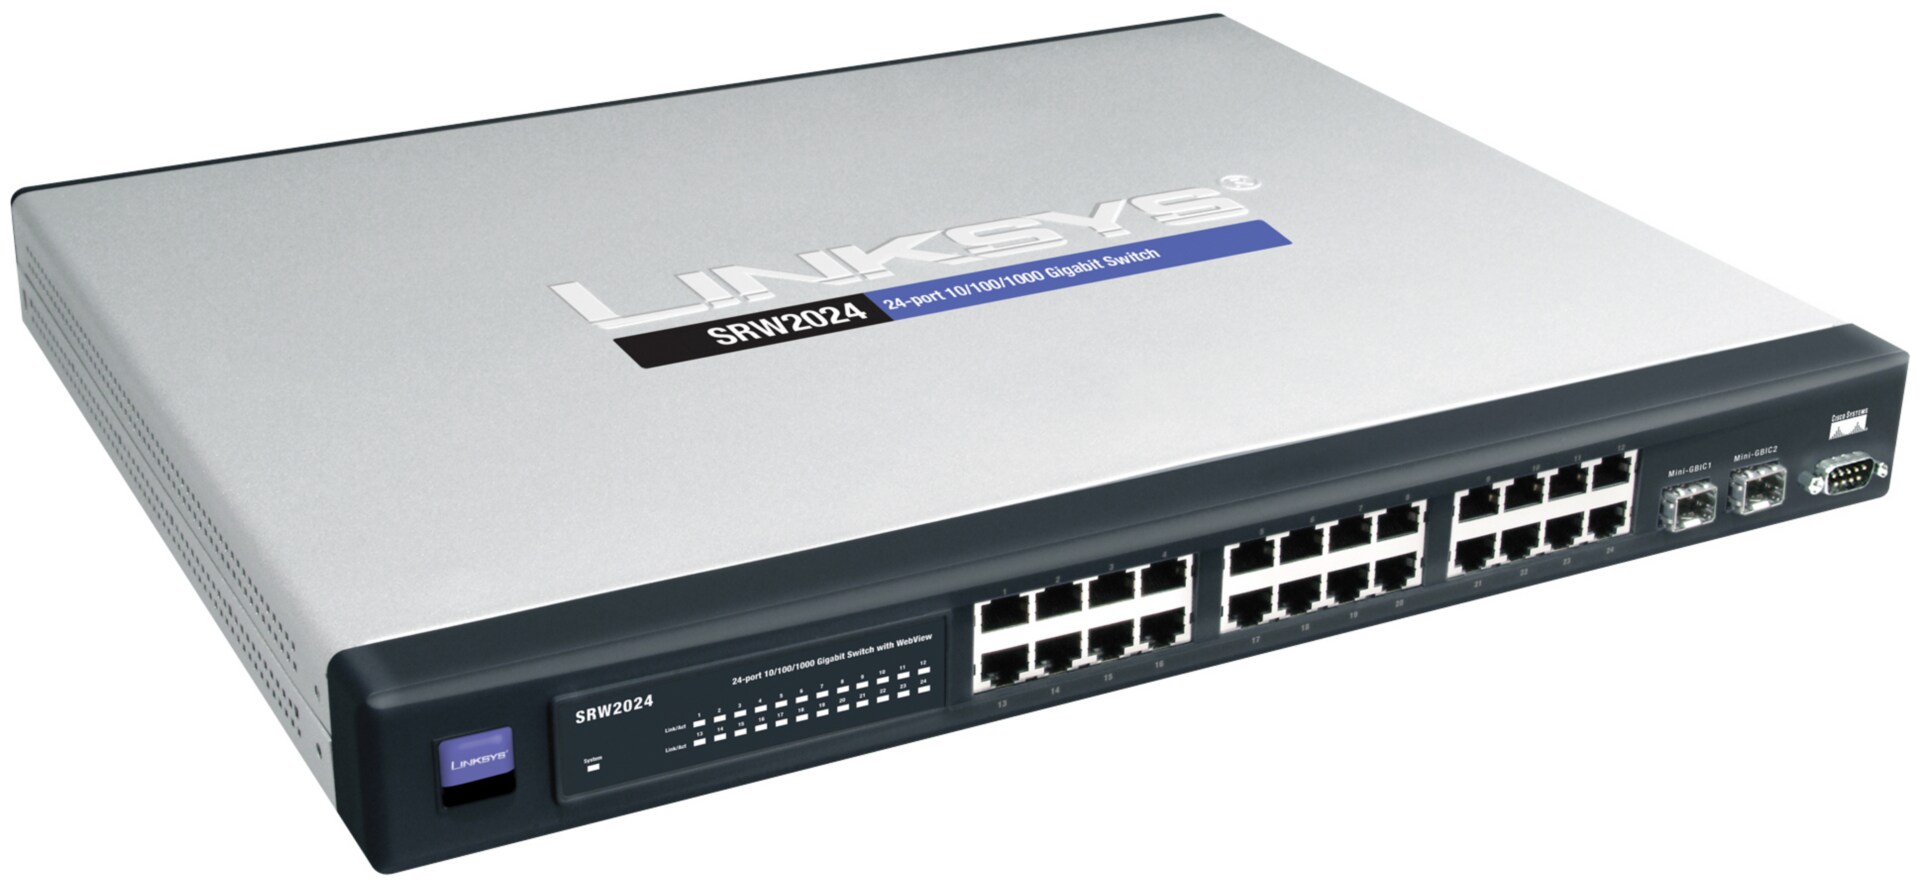 Cisco SRW2024 24-port Gigabit Switch - WebView						
